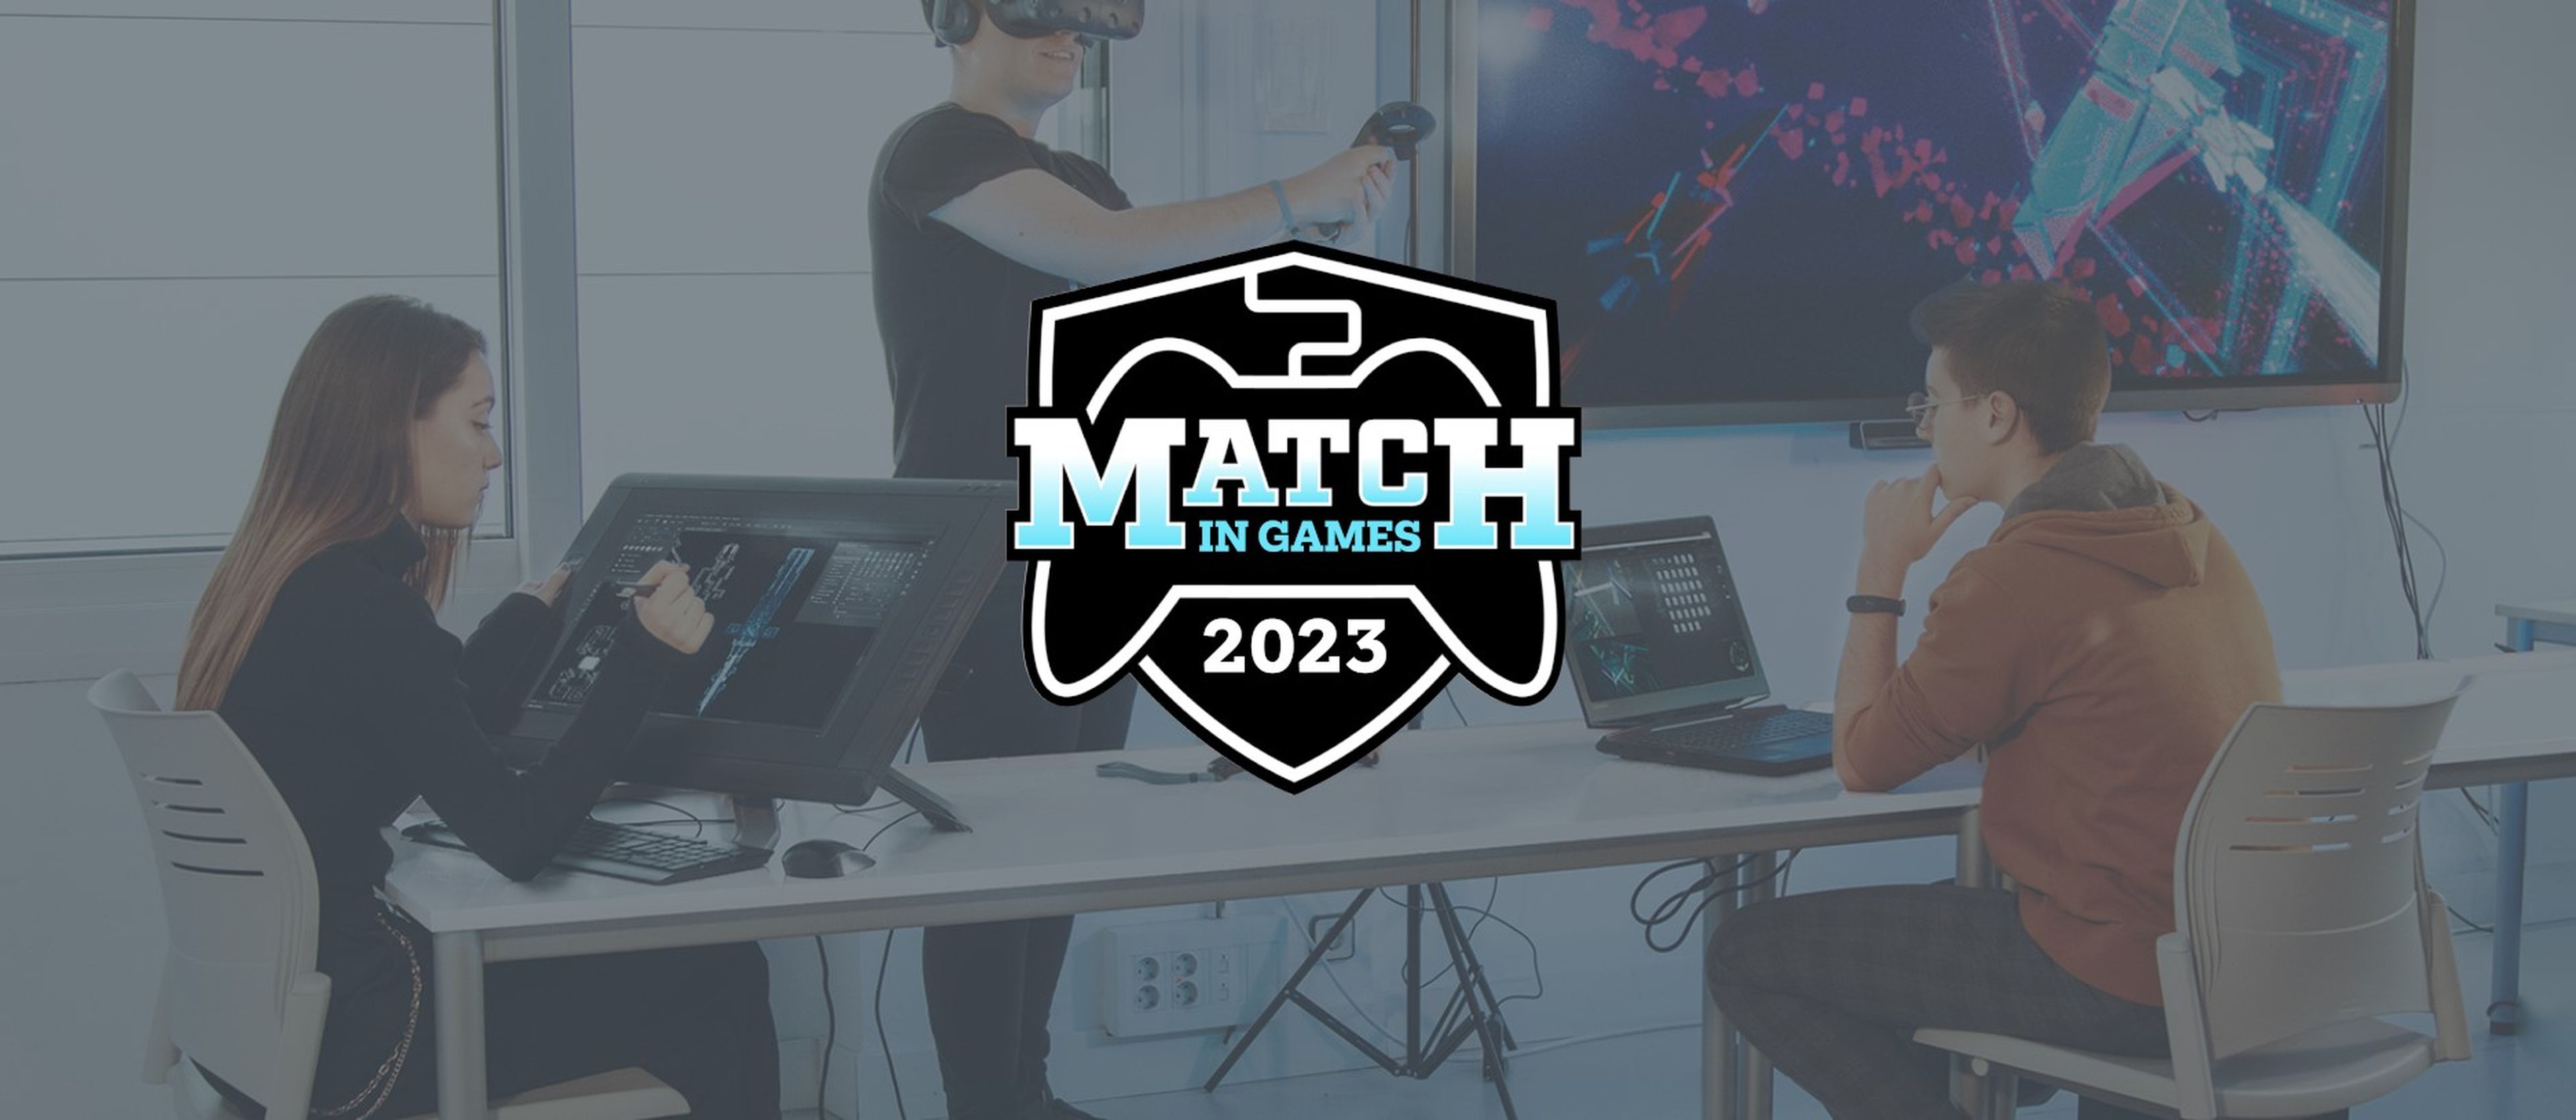 Match in Games 2023